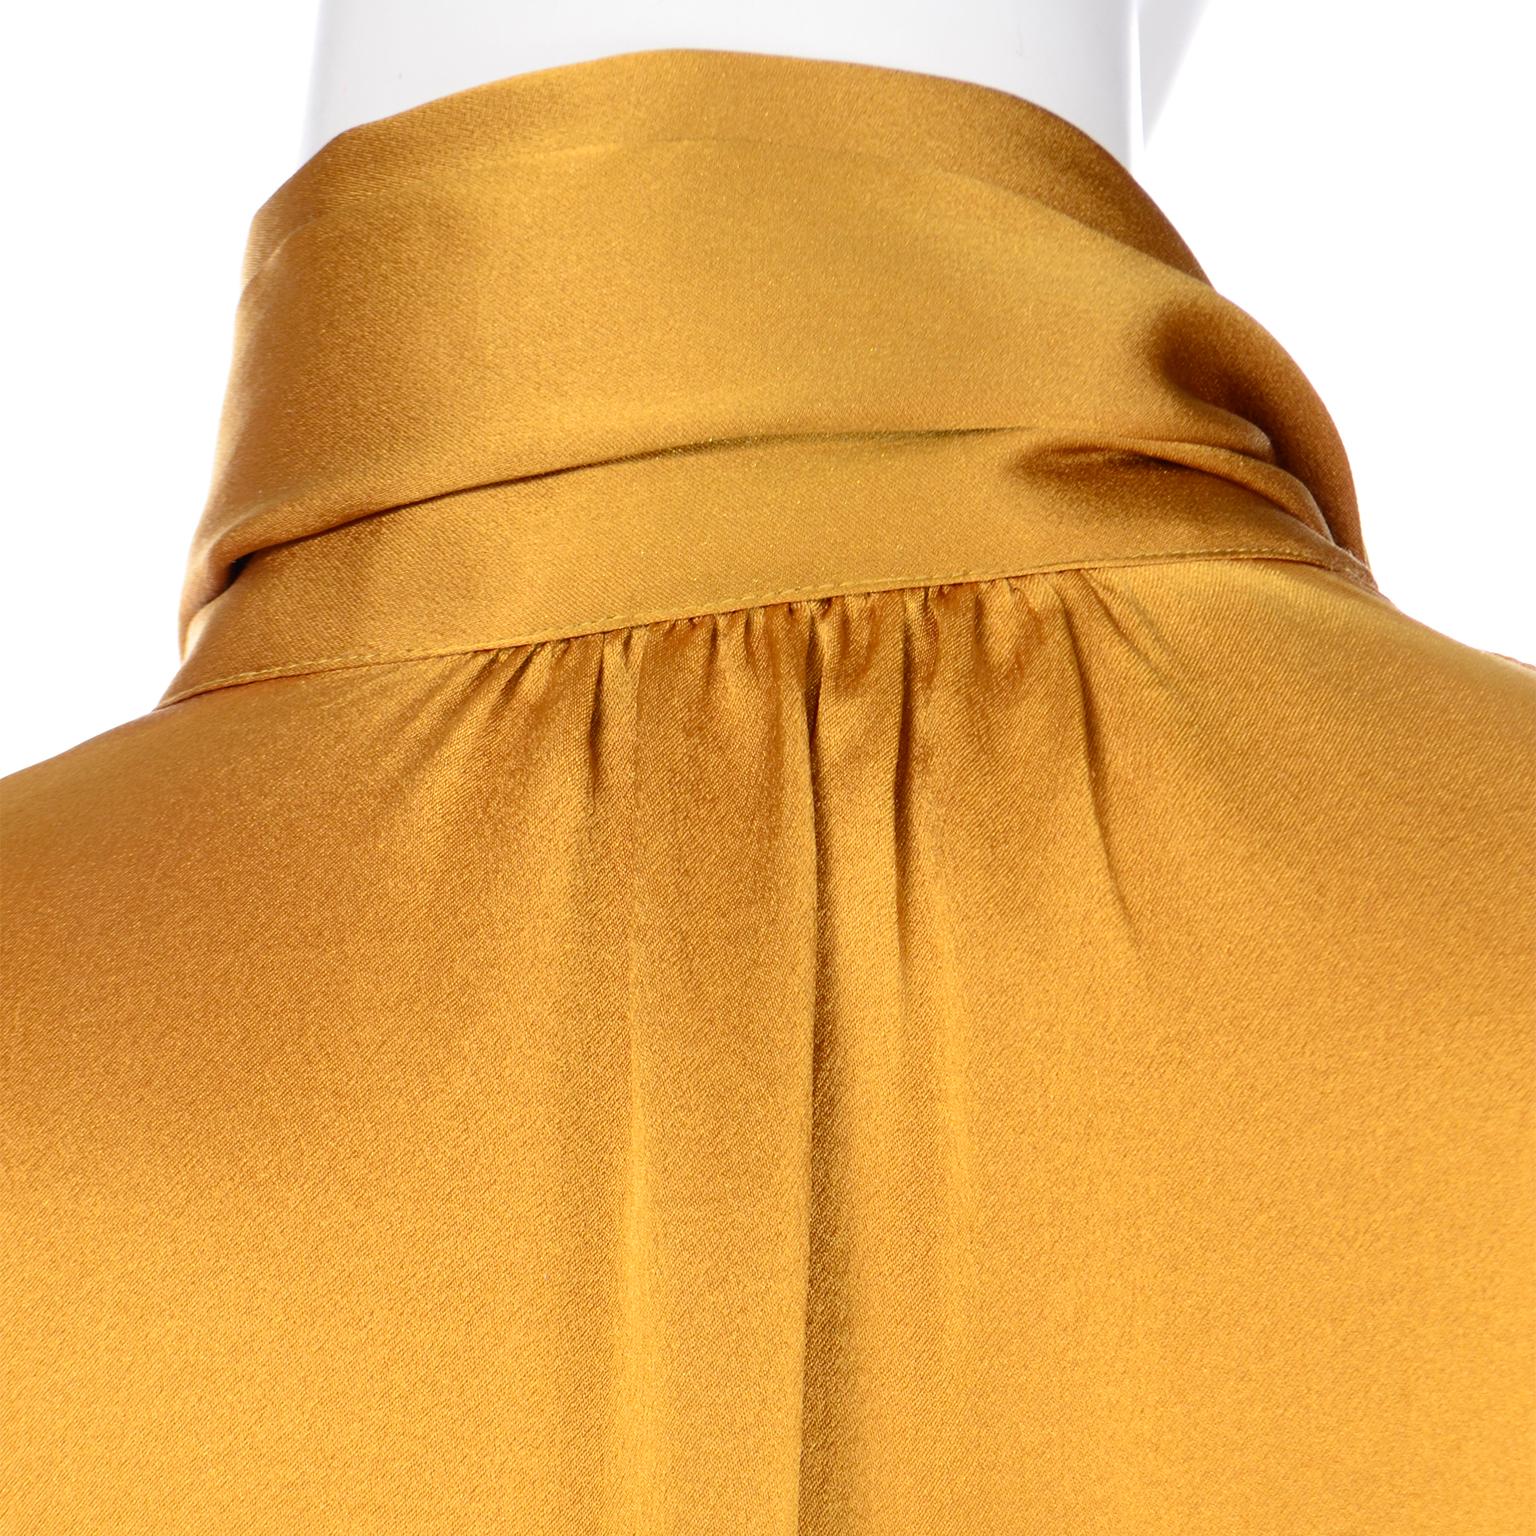 Yves Saint Laurent Silk Charmeuse Gold Blouse w Sash & Belt For Sale 9